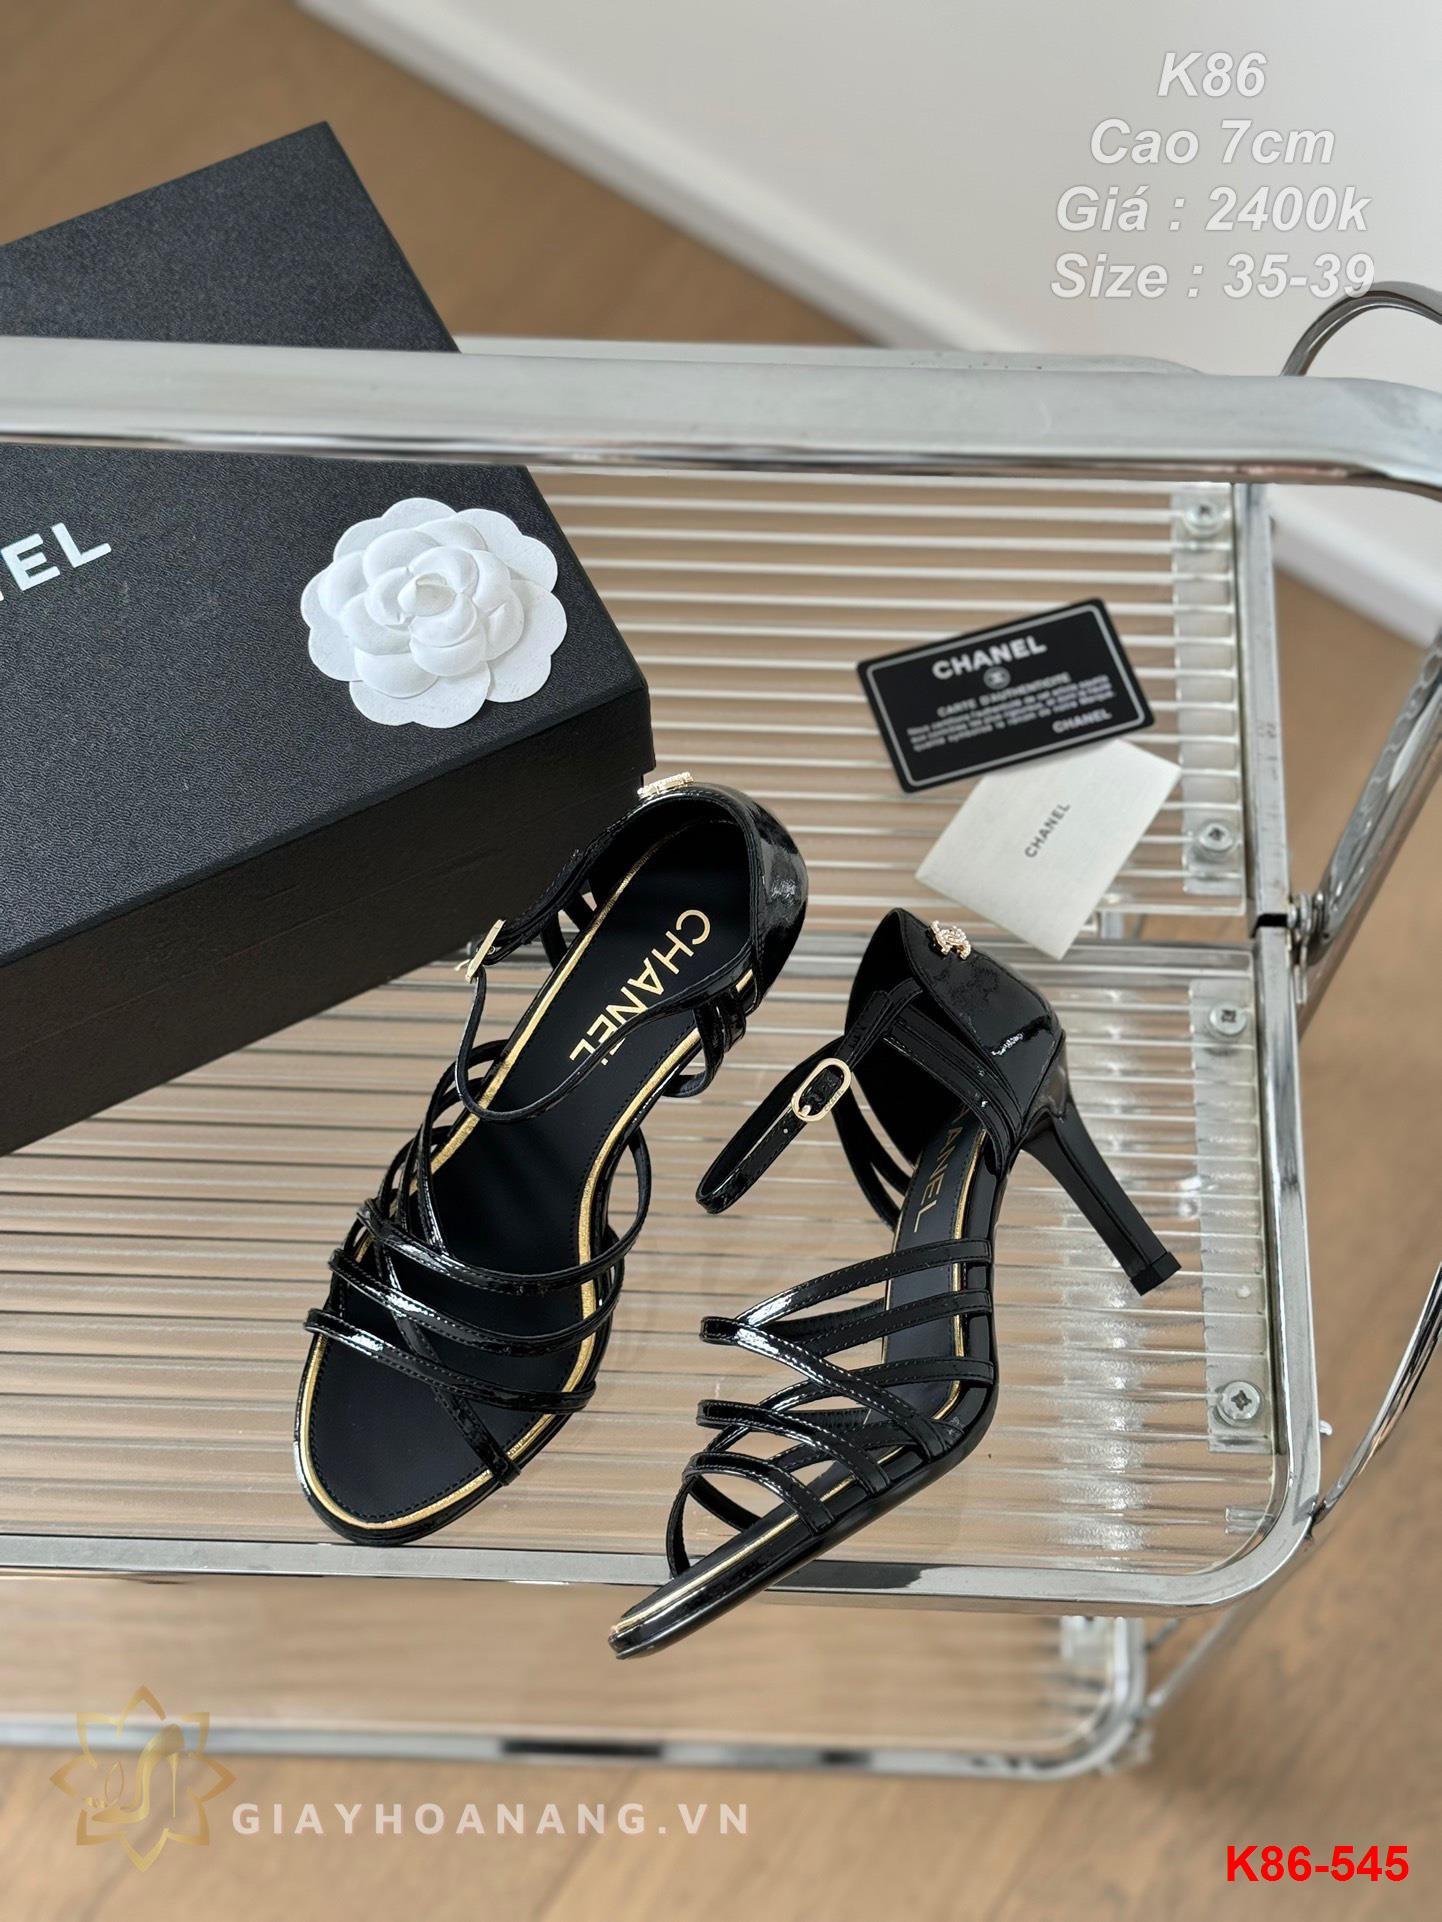 K86-545 Chanel sandal cao 7cm siêu cấp